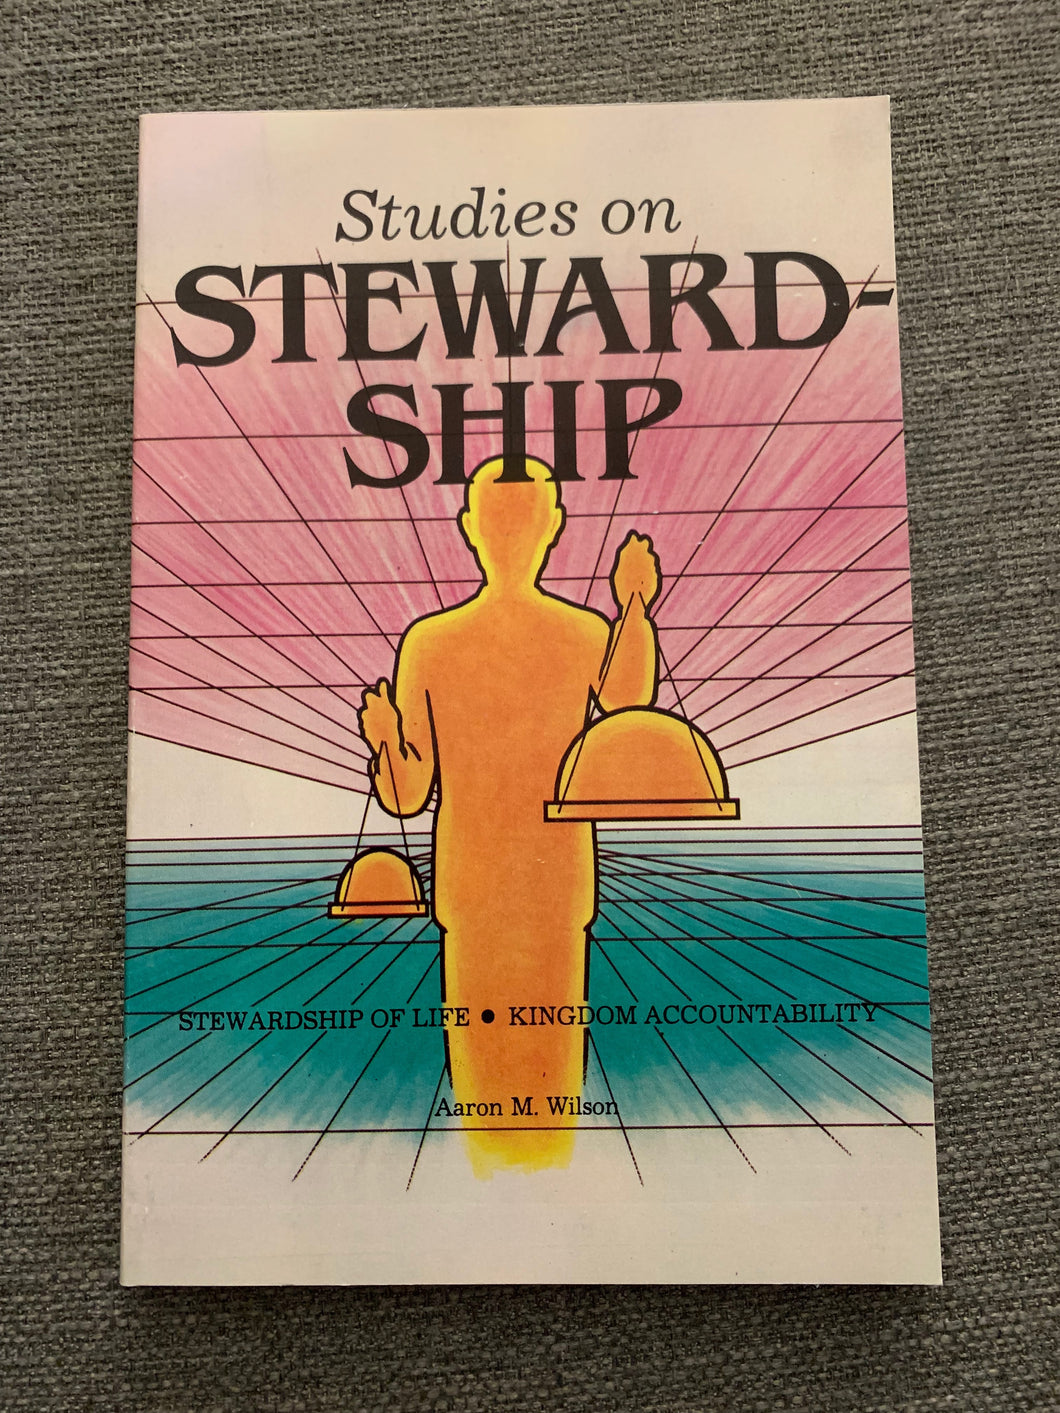 Studies on Stewardship by Aaron M. Wilson